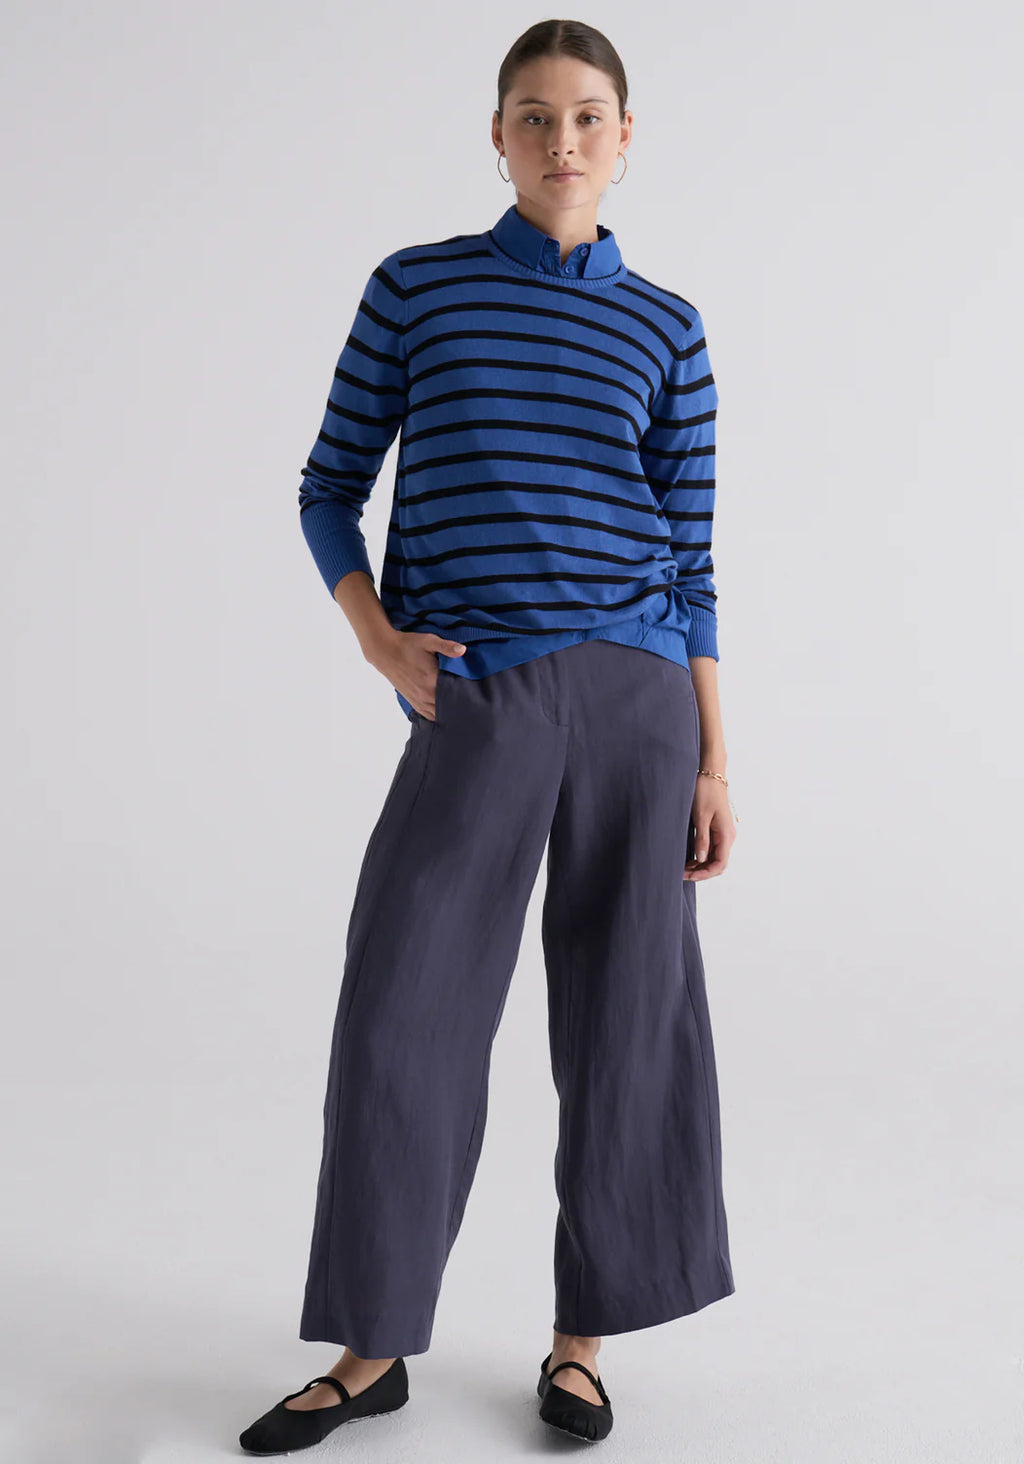 willa striped knit- blue